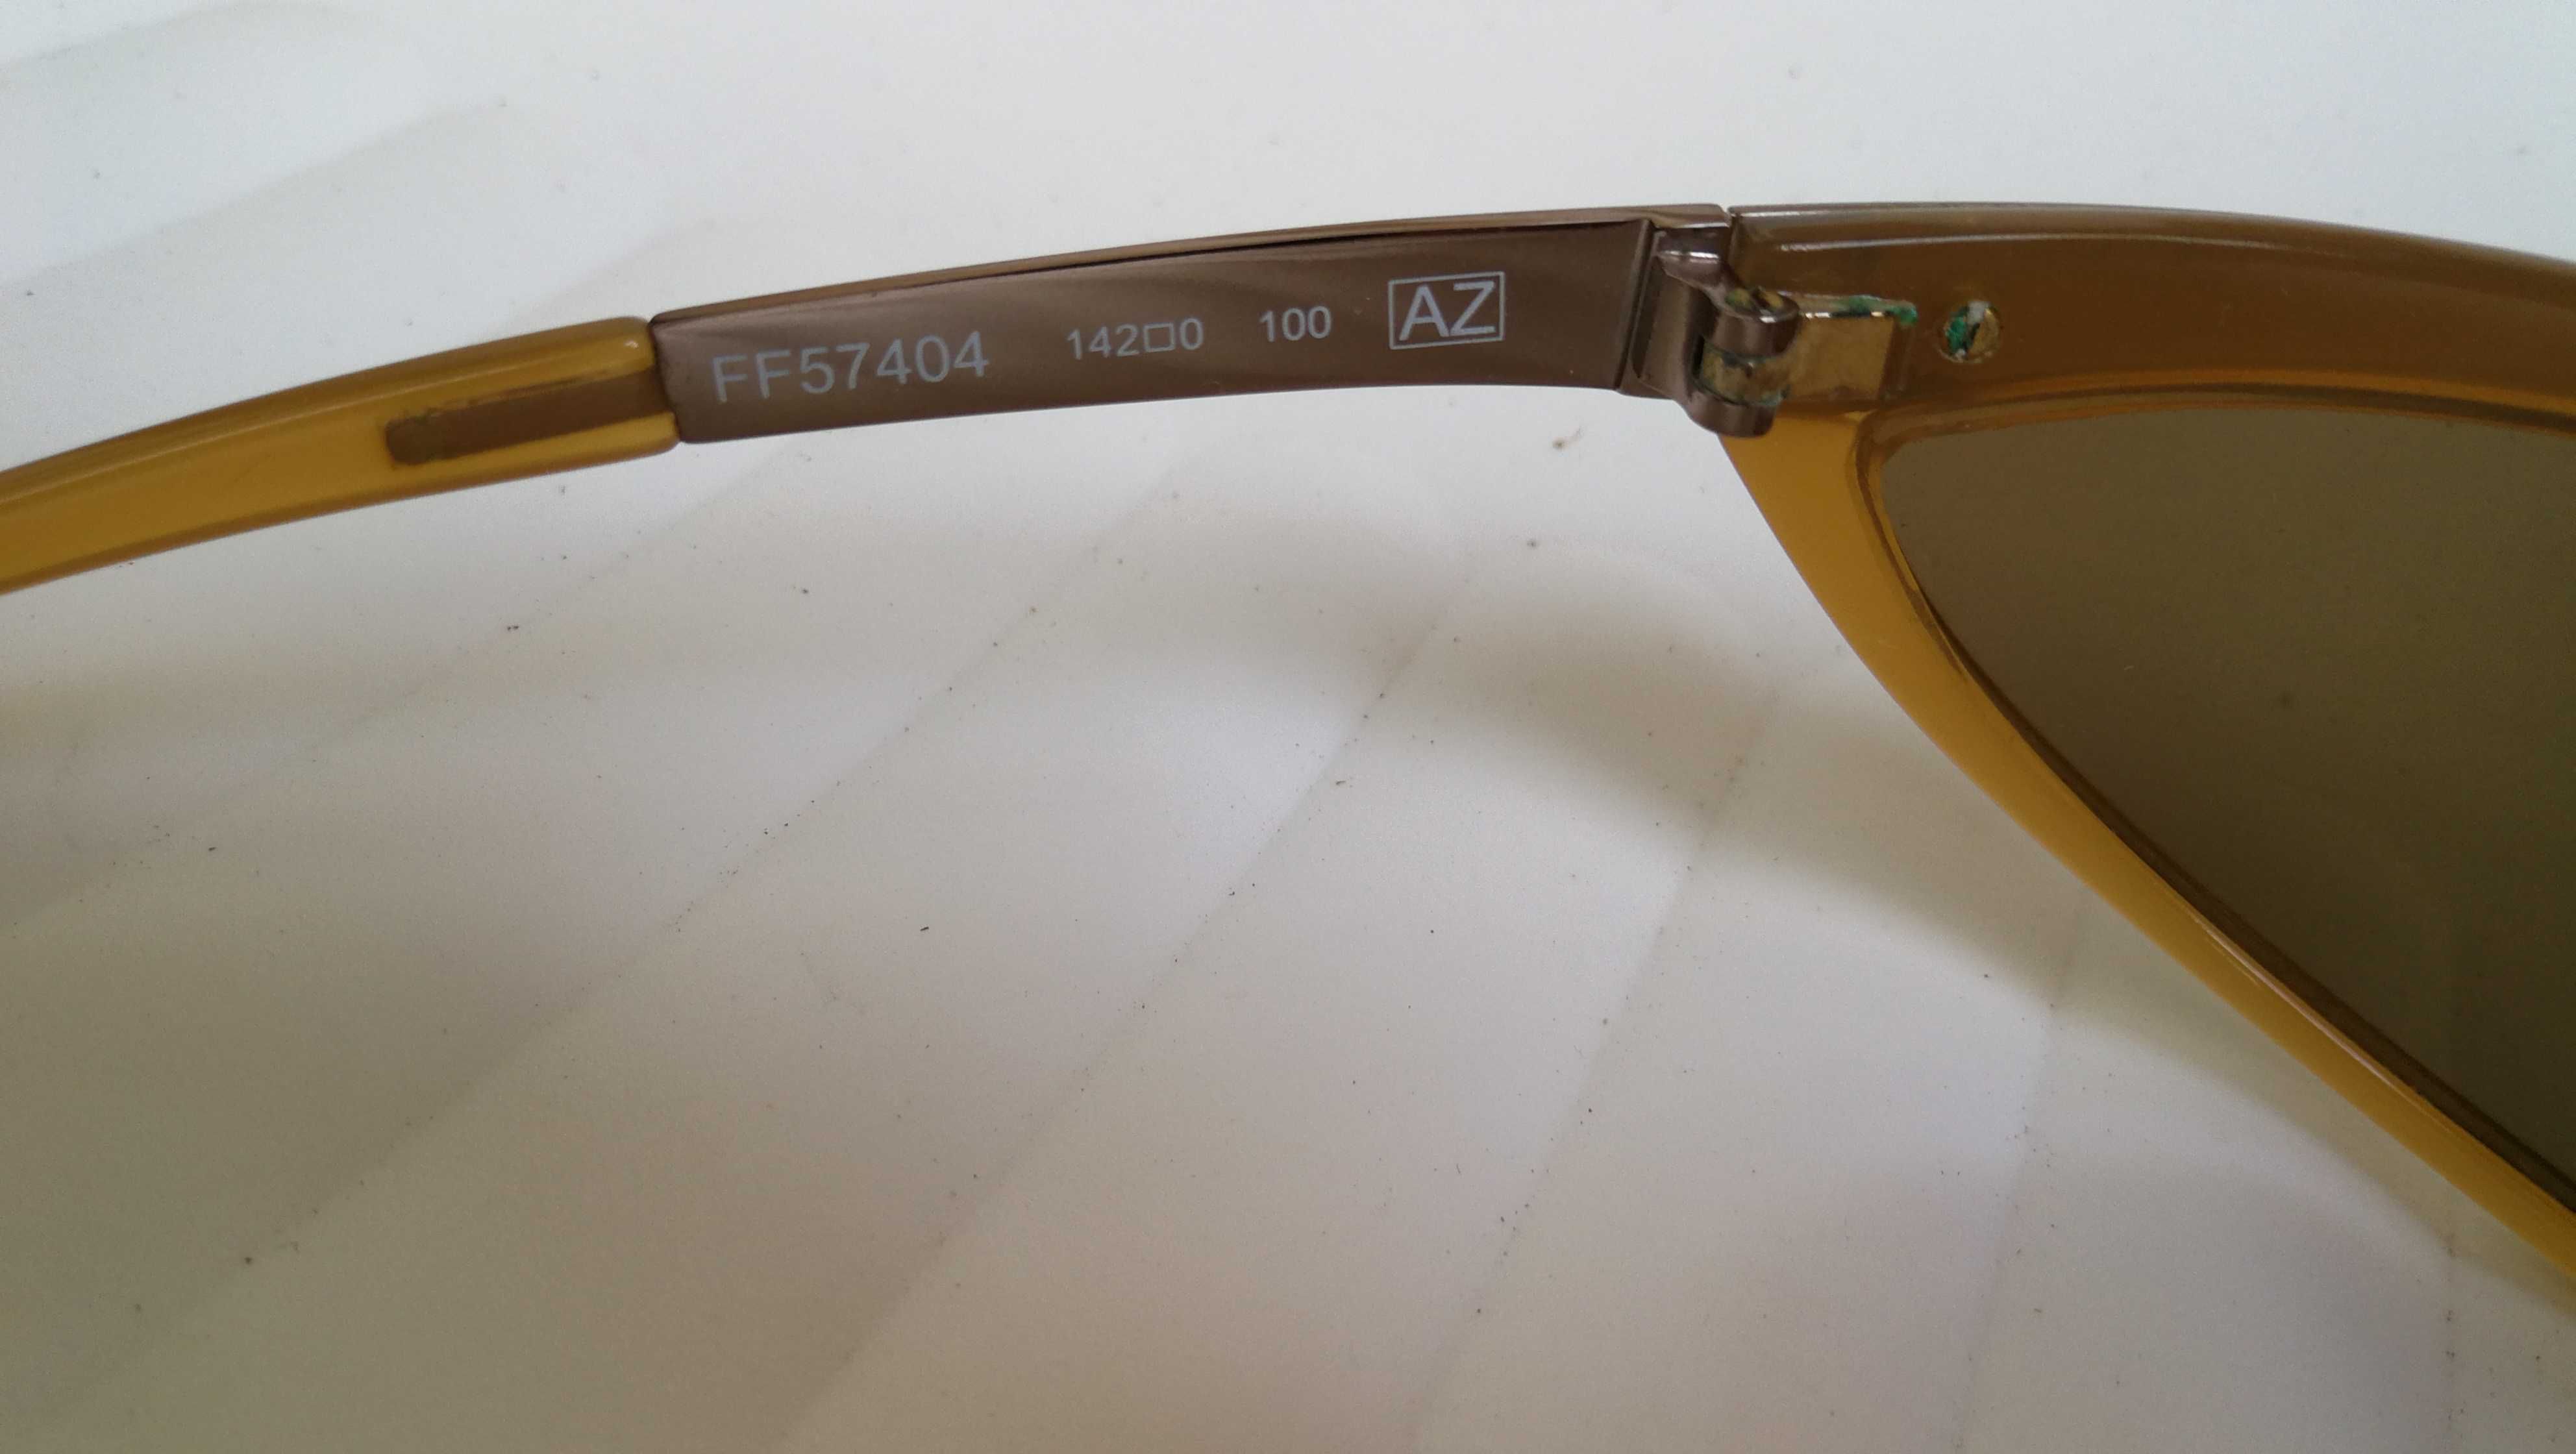 ochelari de soare GF FERRE,UV,made in italy